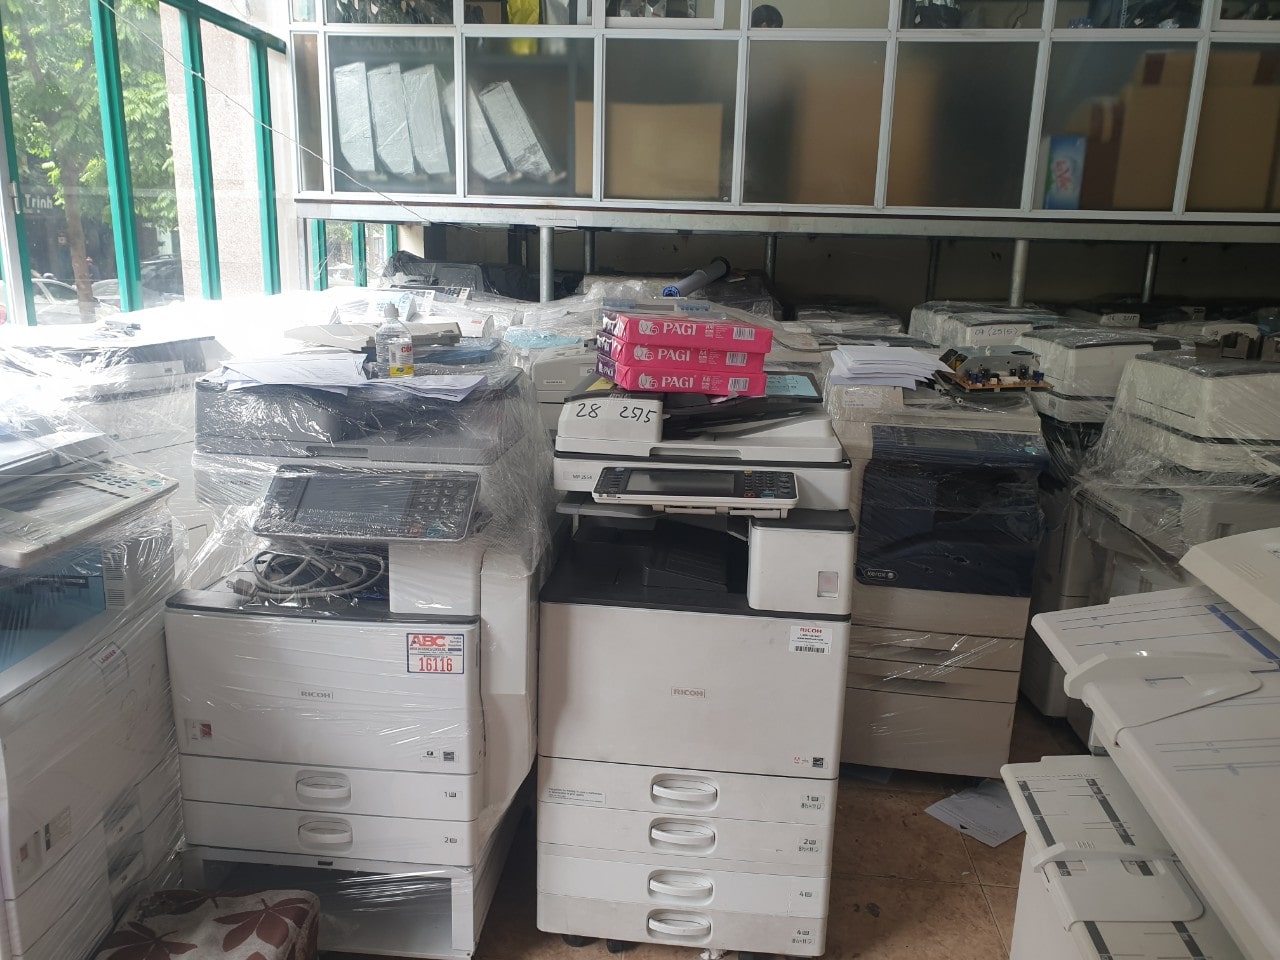 thuê máy photocopy tại tphcm